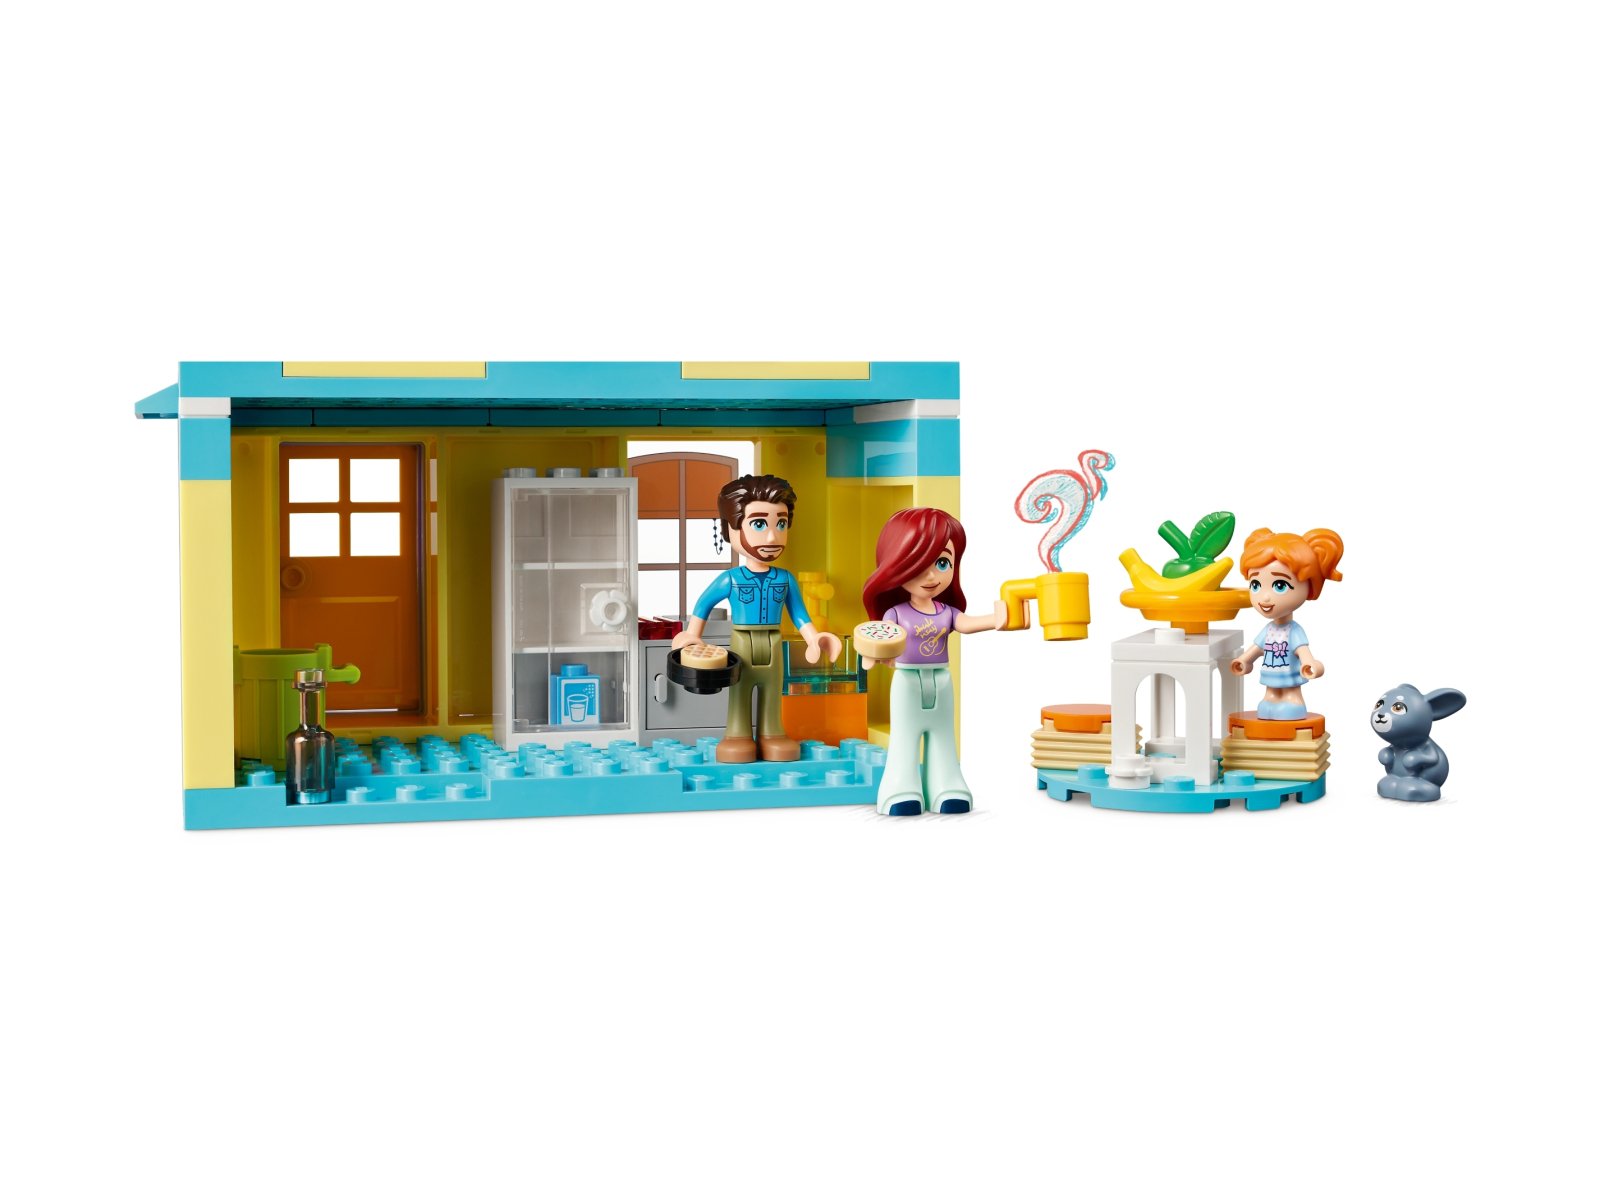 LEGO Friends 41724 Dom Paisley